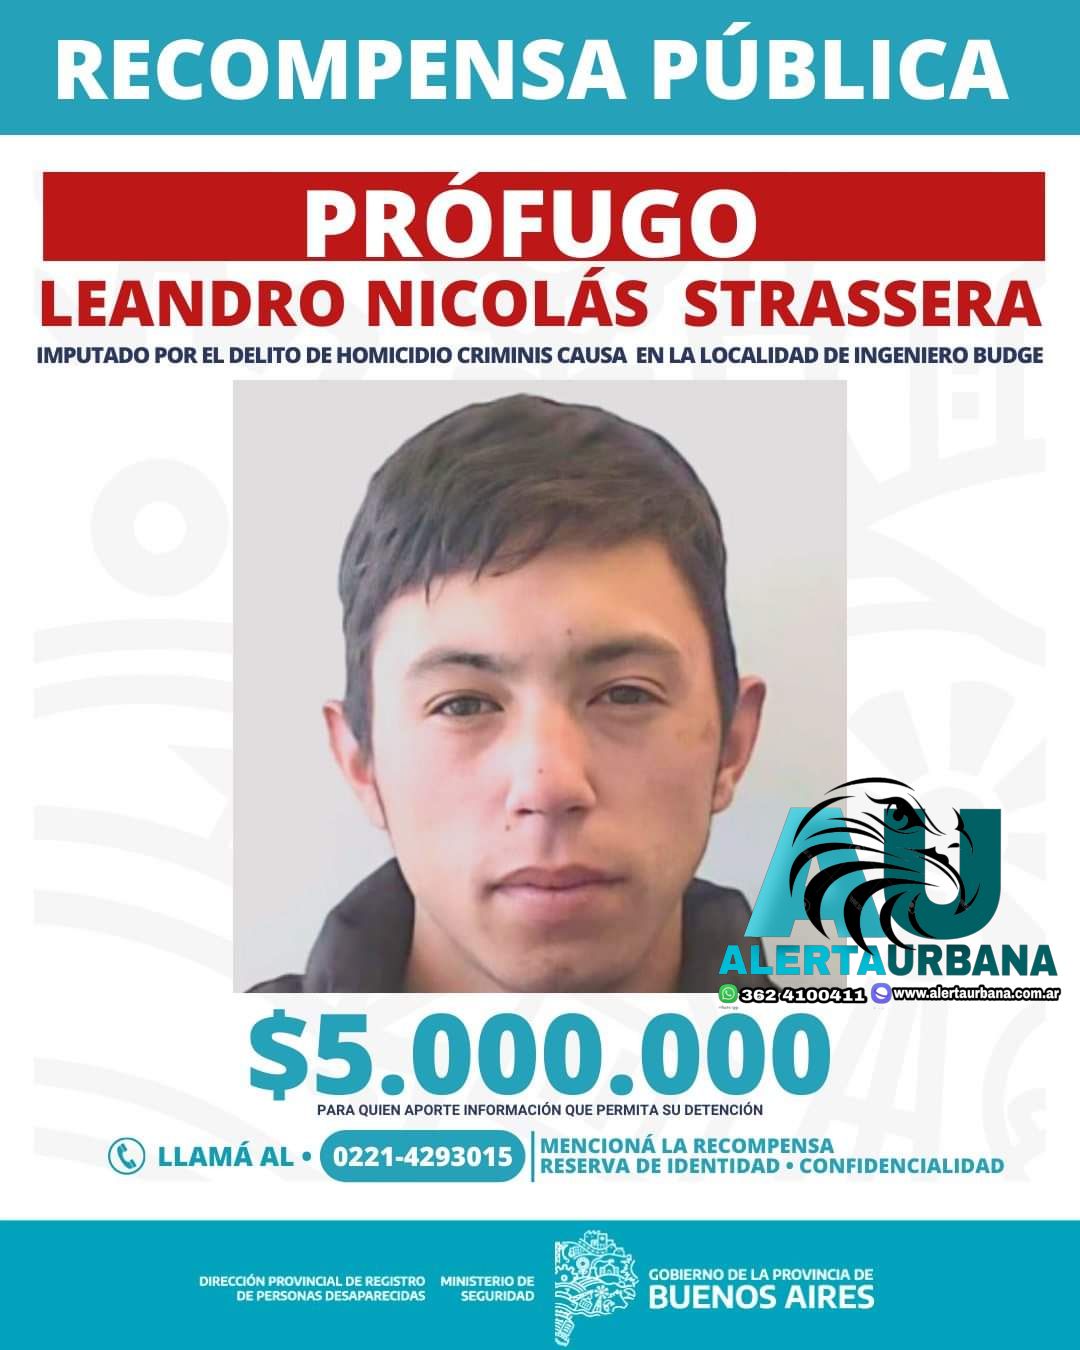 Se busca al prófugo Leandro Nicolás Strassera por homicidio criminis causa